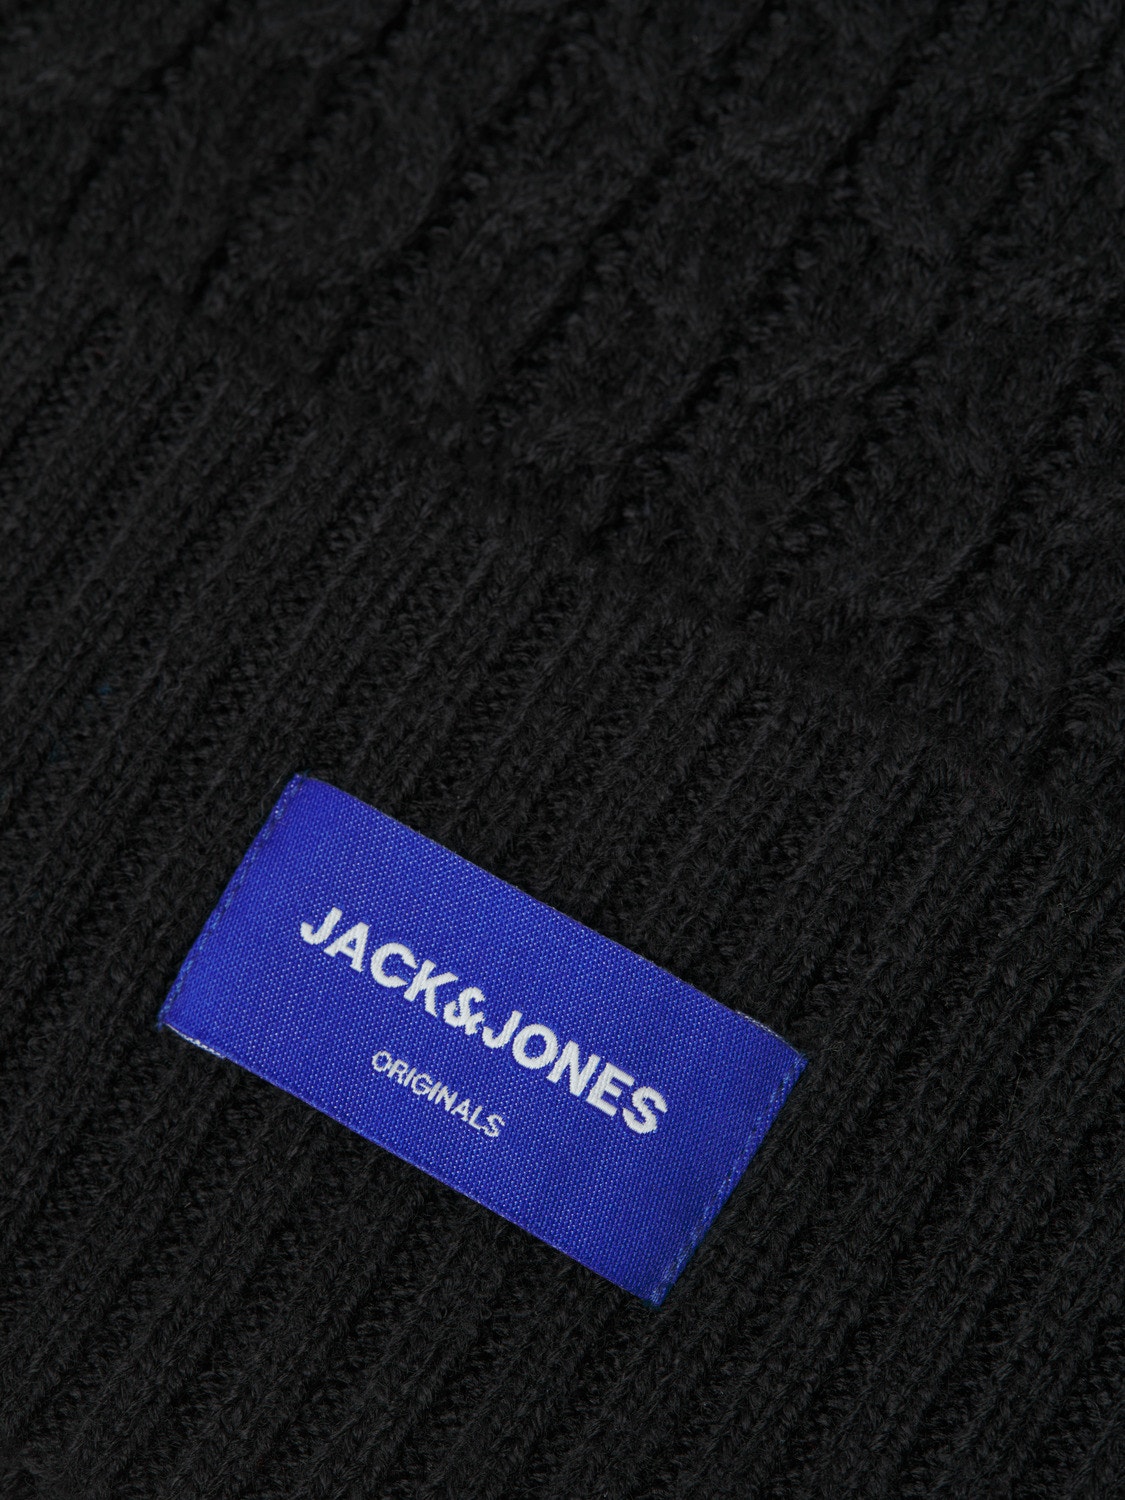 Jack & Jones Σκουφάκι -Black - 12247260